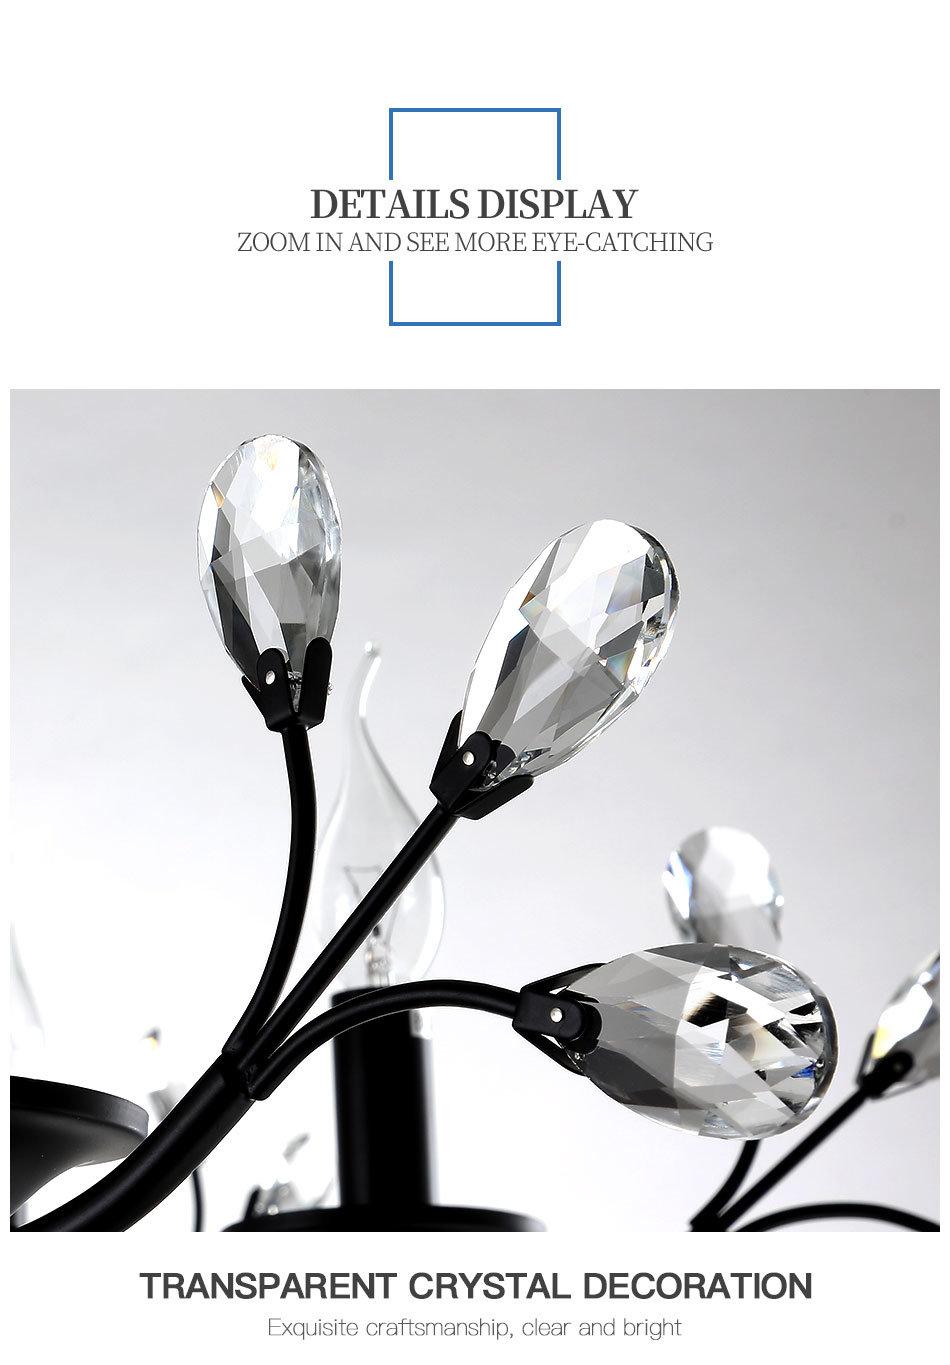 Lobby Crystal Chandelier Lighting Luxury Gold Crystal Pendant Lighting Ceiling Chandelier